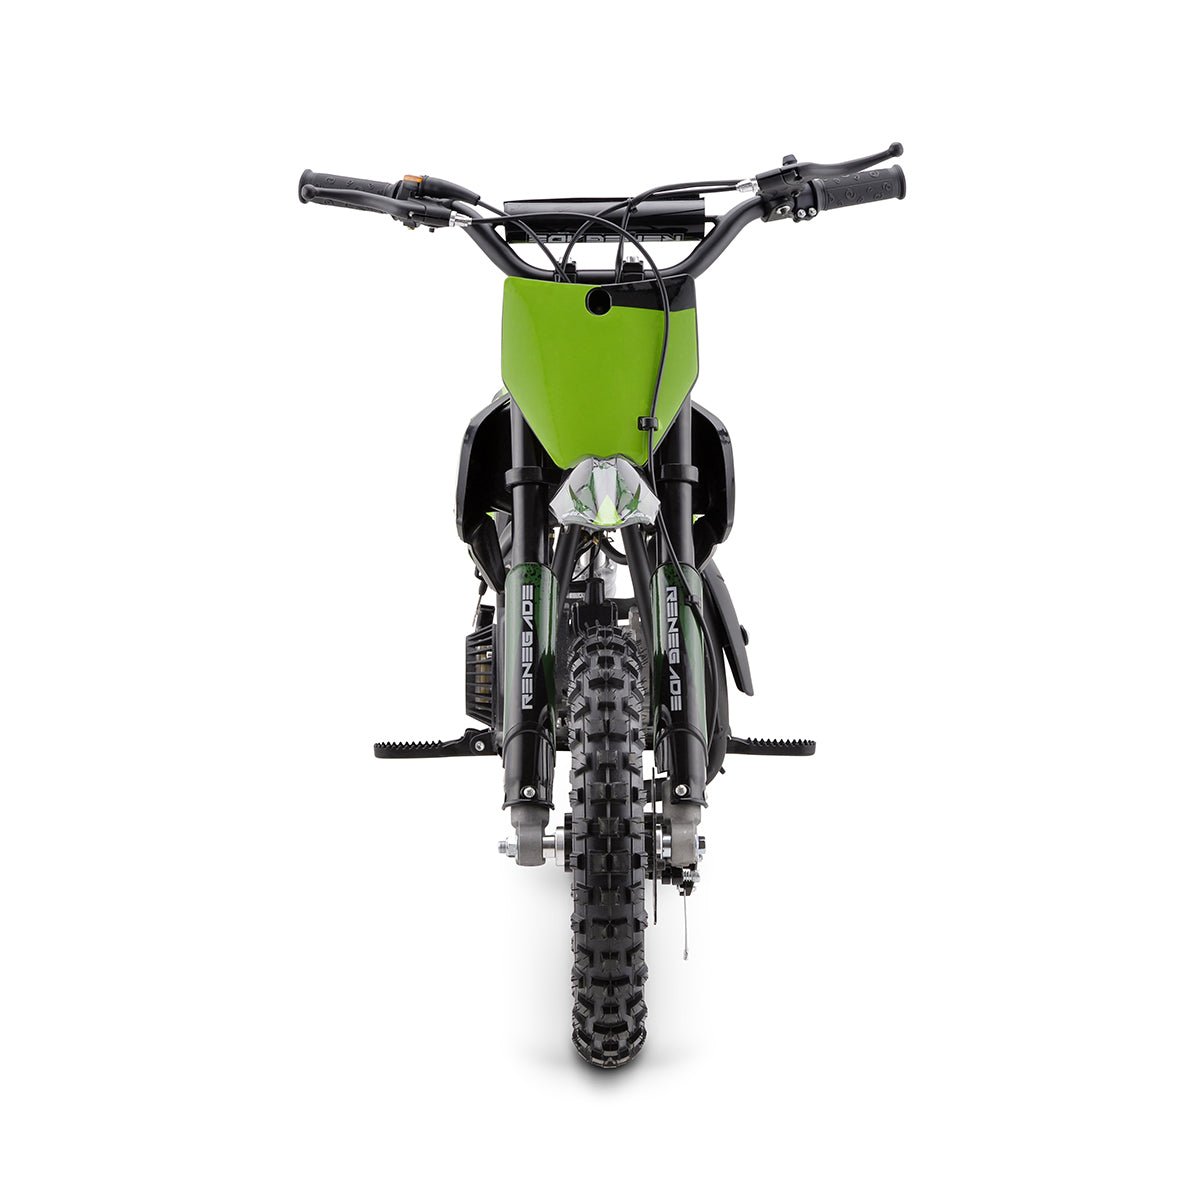 Renegade 80R 49cc Petrol Mini Dirt Bike - Green